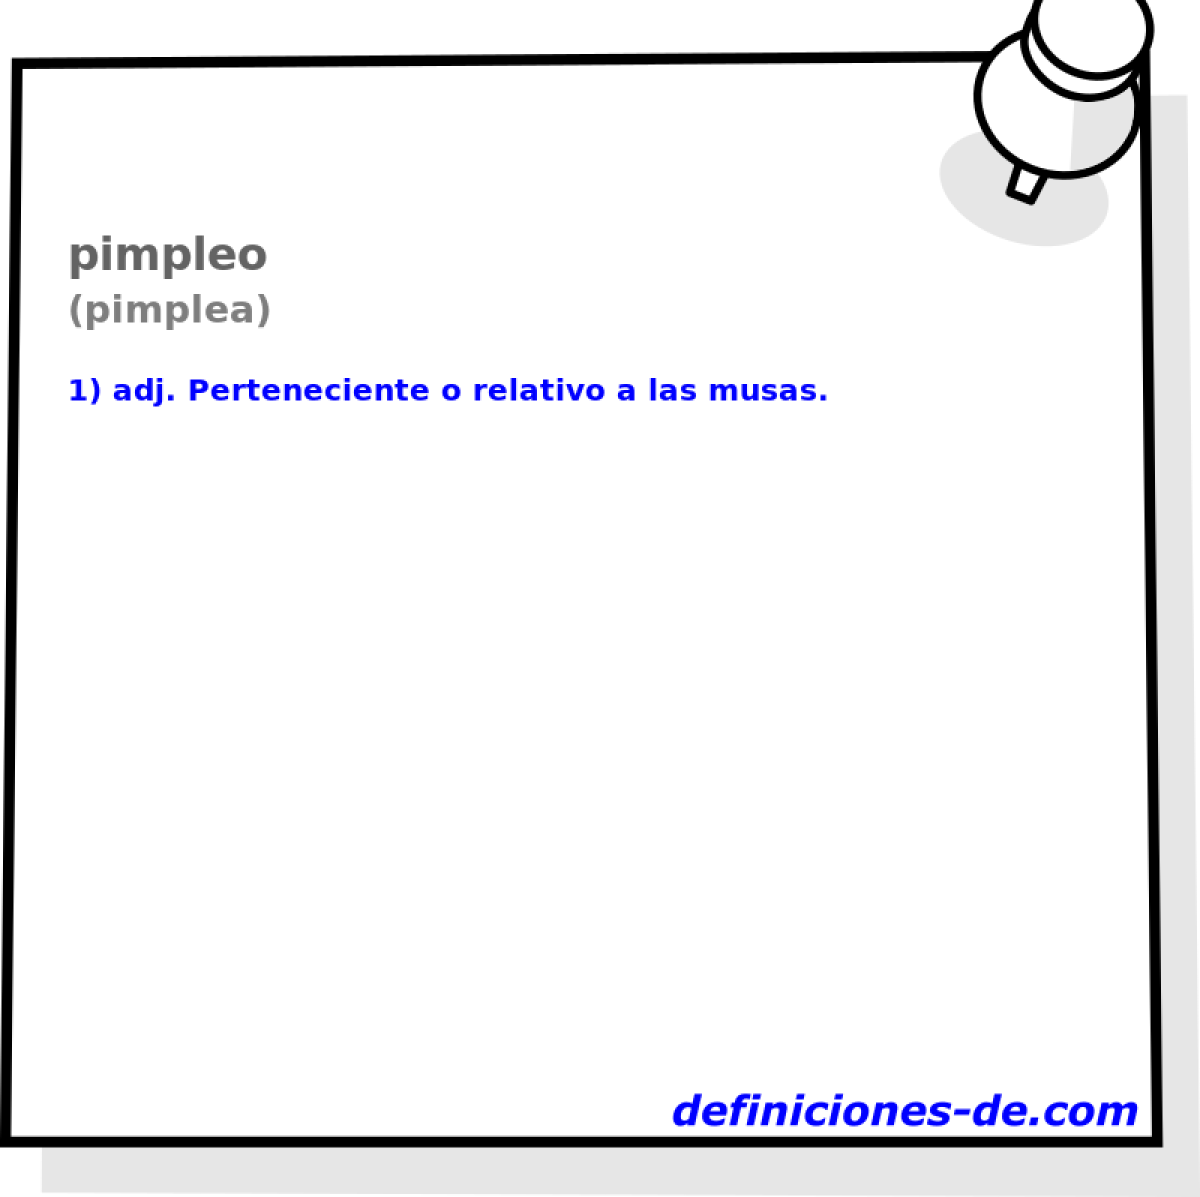 pimpleo (pimplea)